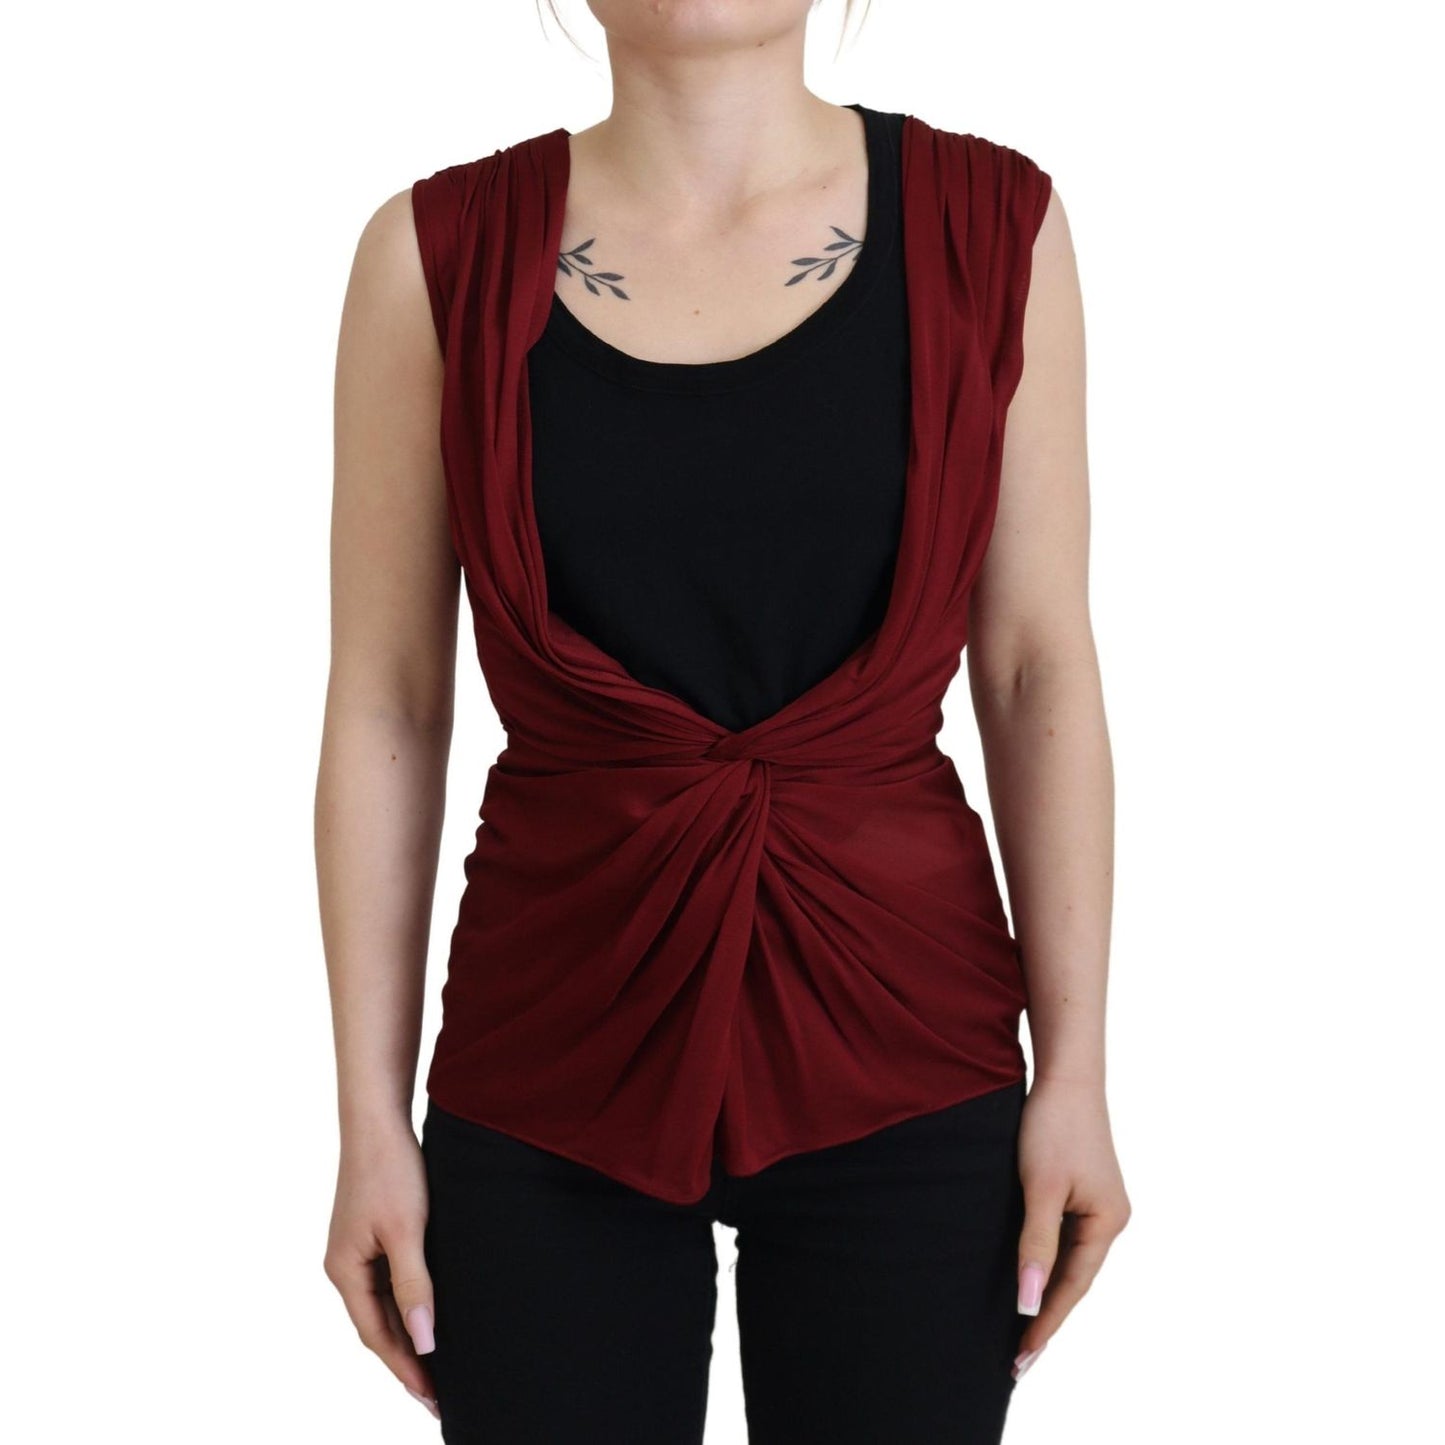 Dolce & Gabbana Bordeaux Silk Blend Top Blouse bordeaux-silk-stretch-top-vest-blouse IMG_5930-1-scaled-ed45cce1-d2b.jpg